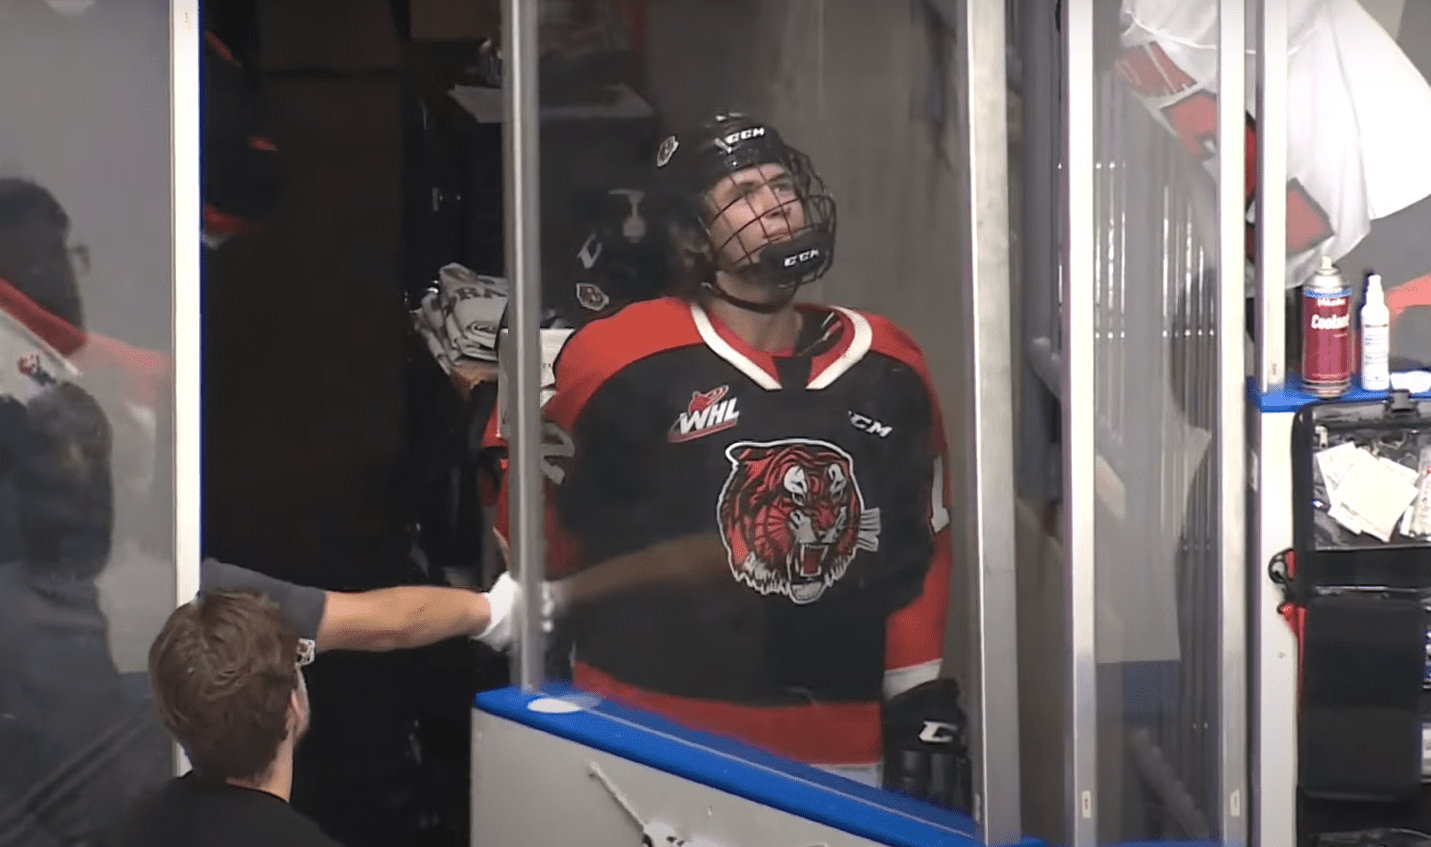 McKenna records 17 points as the Yukon starts boys' hockey with